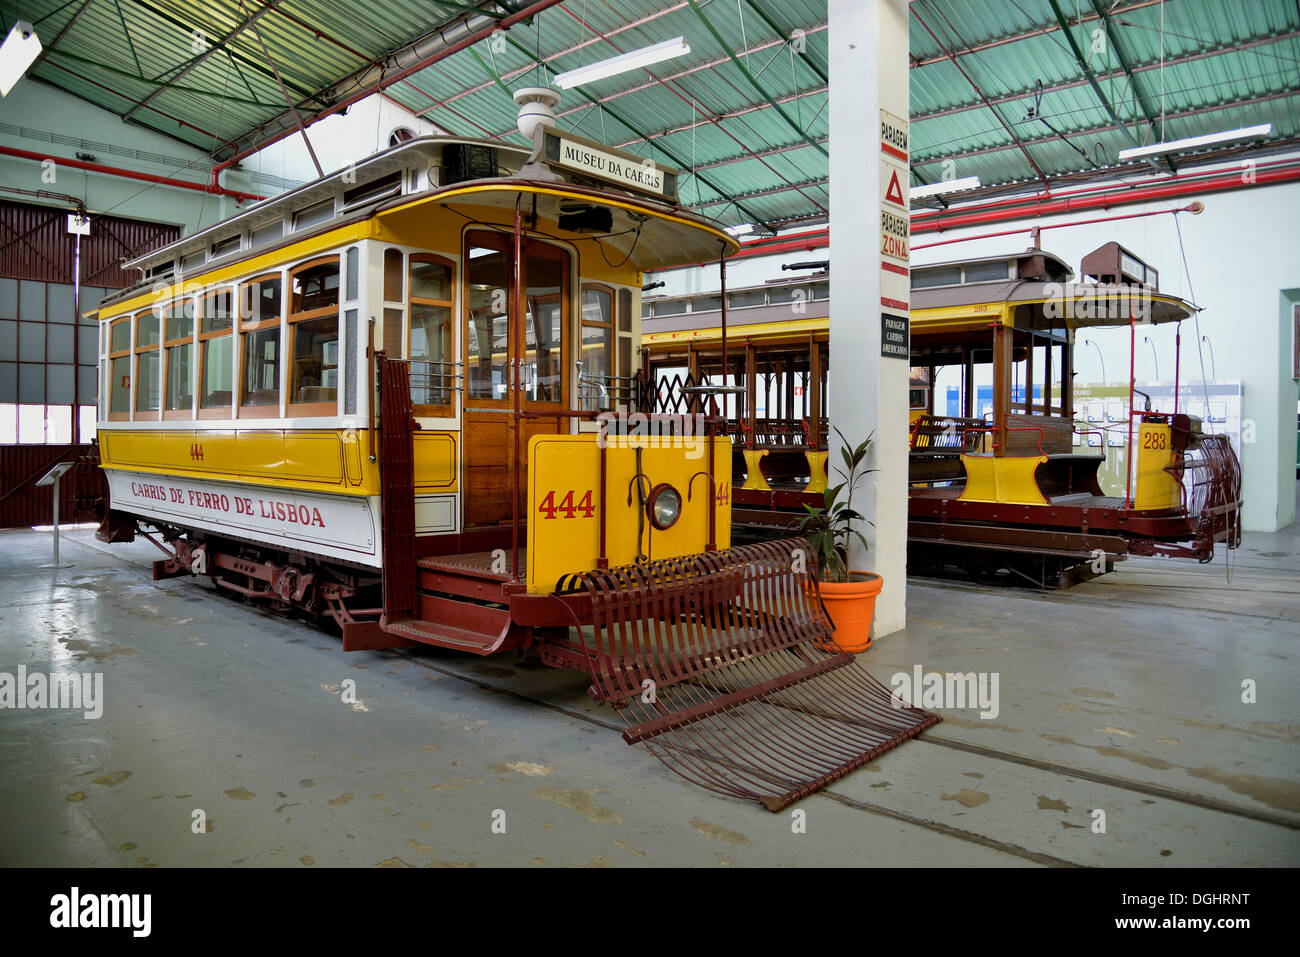 Old trams in the Museu da Carris tram museum, Lisbon, Portugal Stock Photo